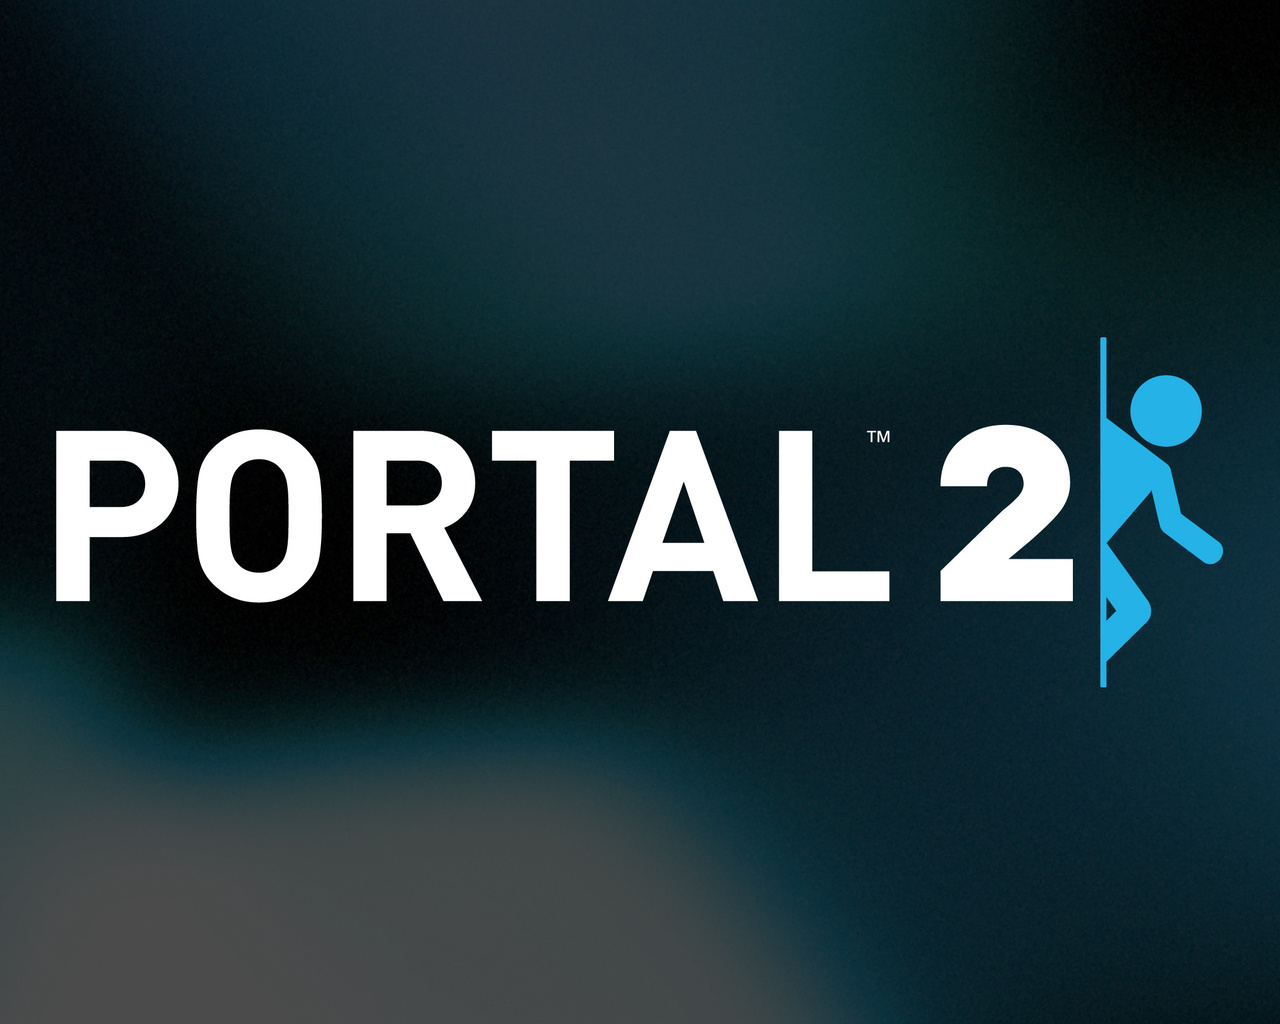 Portal 2, , , valve